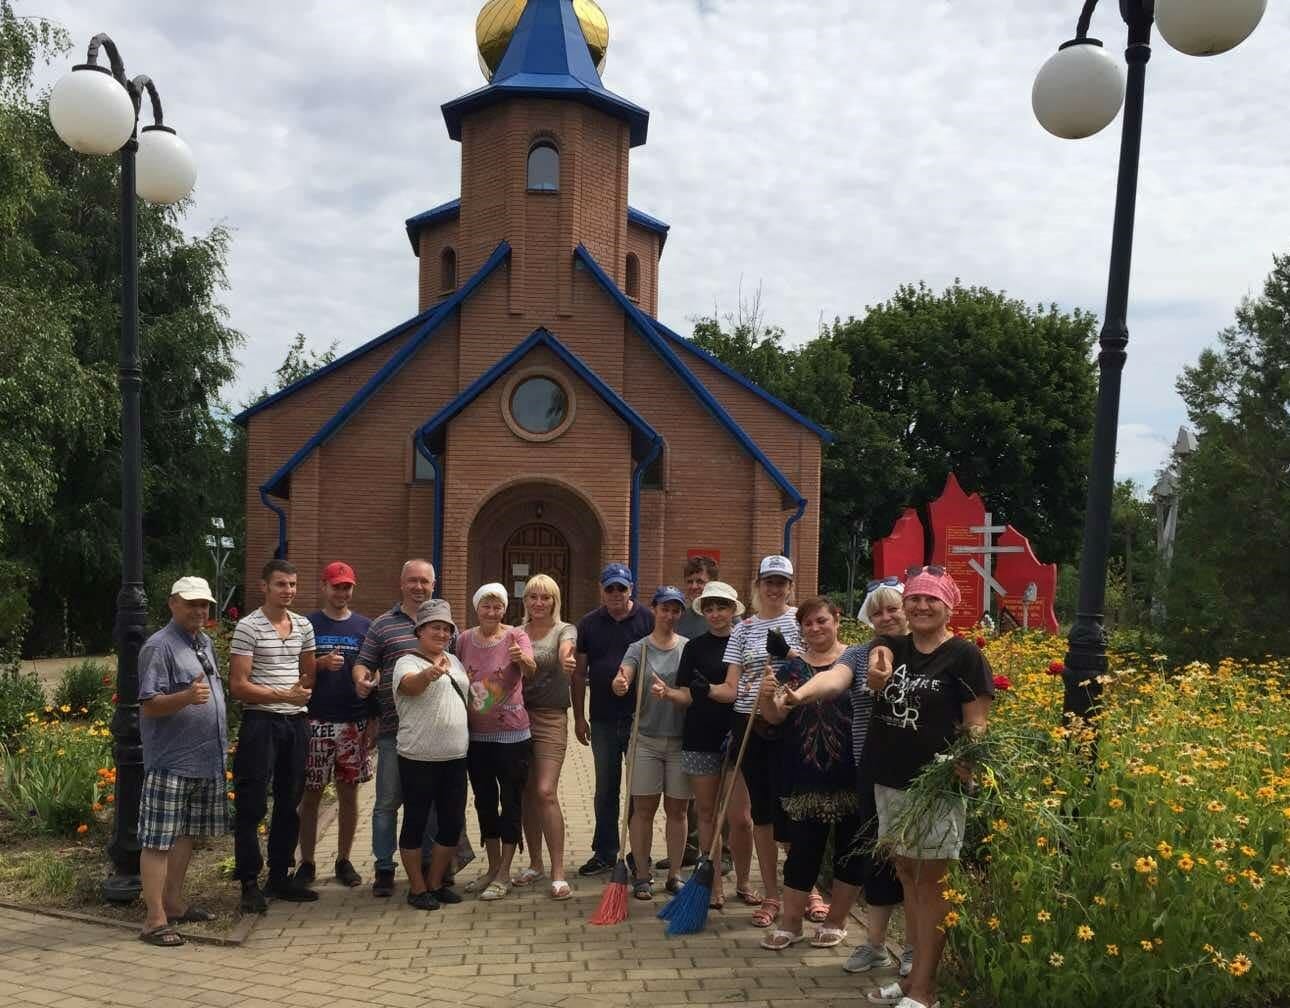 Toloka (community members’ gathering for volunteer work for the community’s benefit) near the Ephraim Church